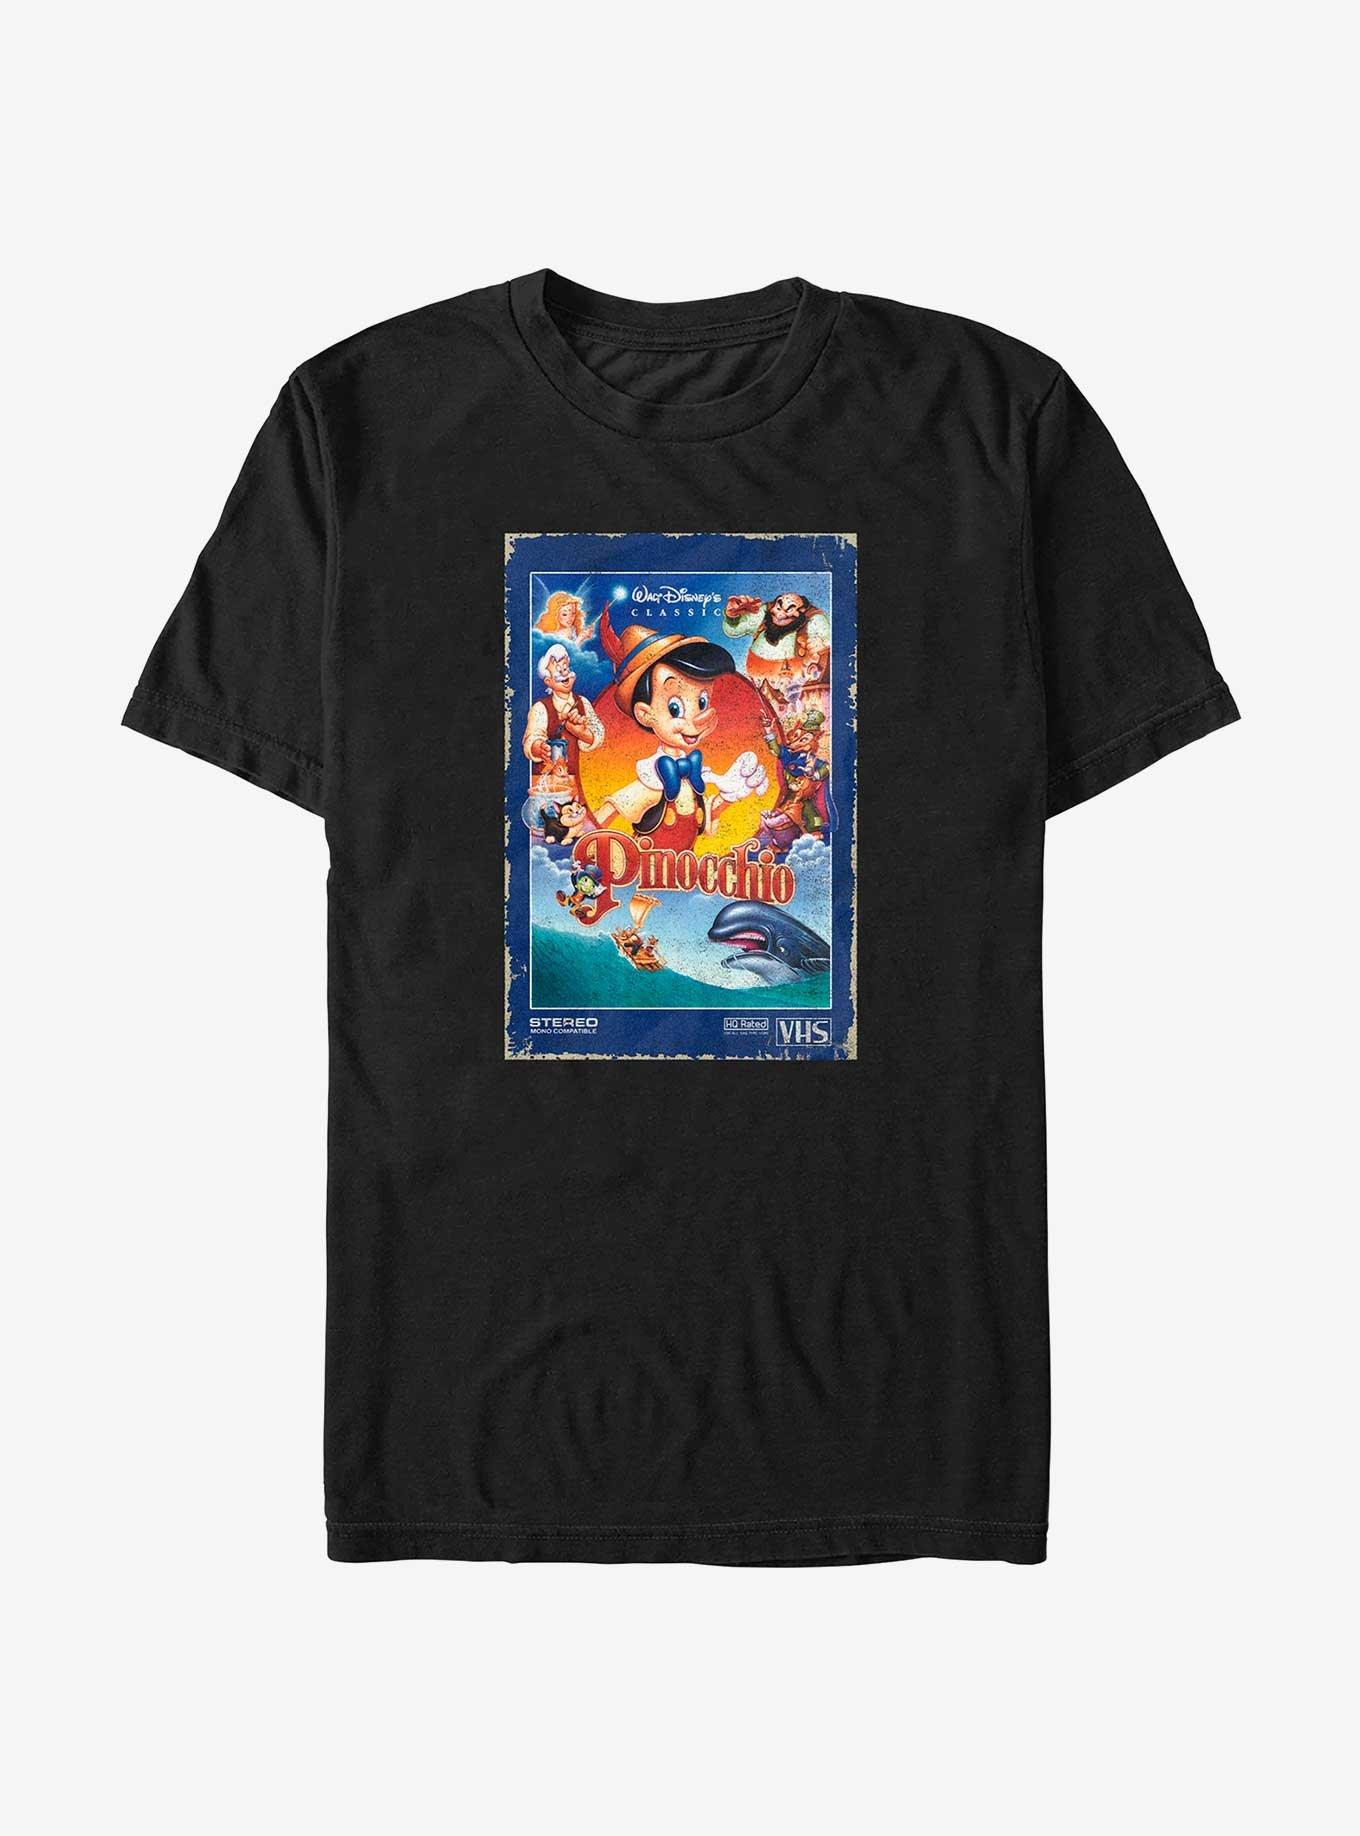 Scott Pilgrim's Astro Boy Shirt 